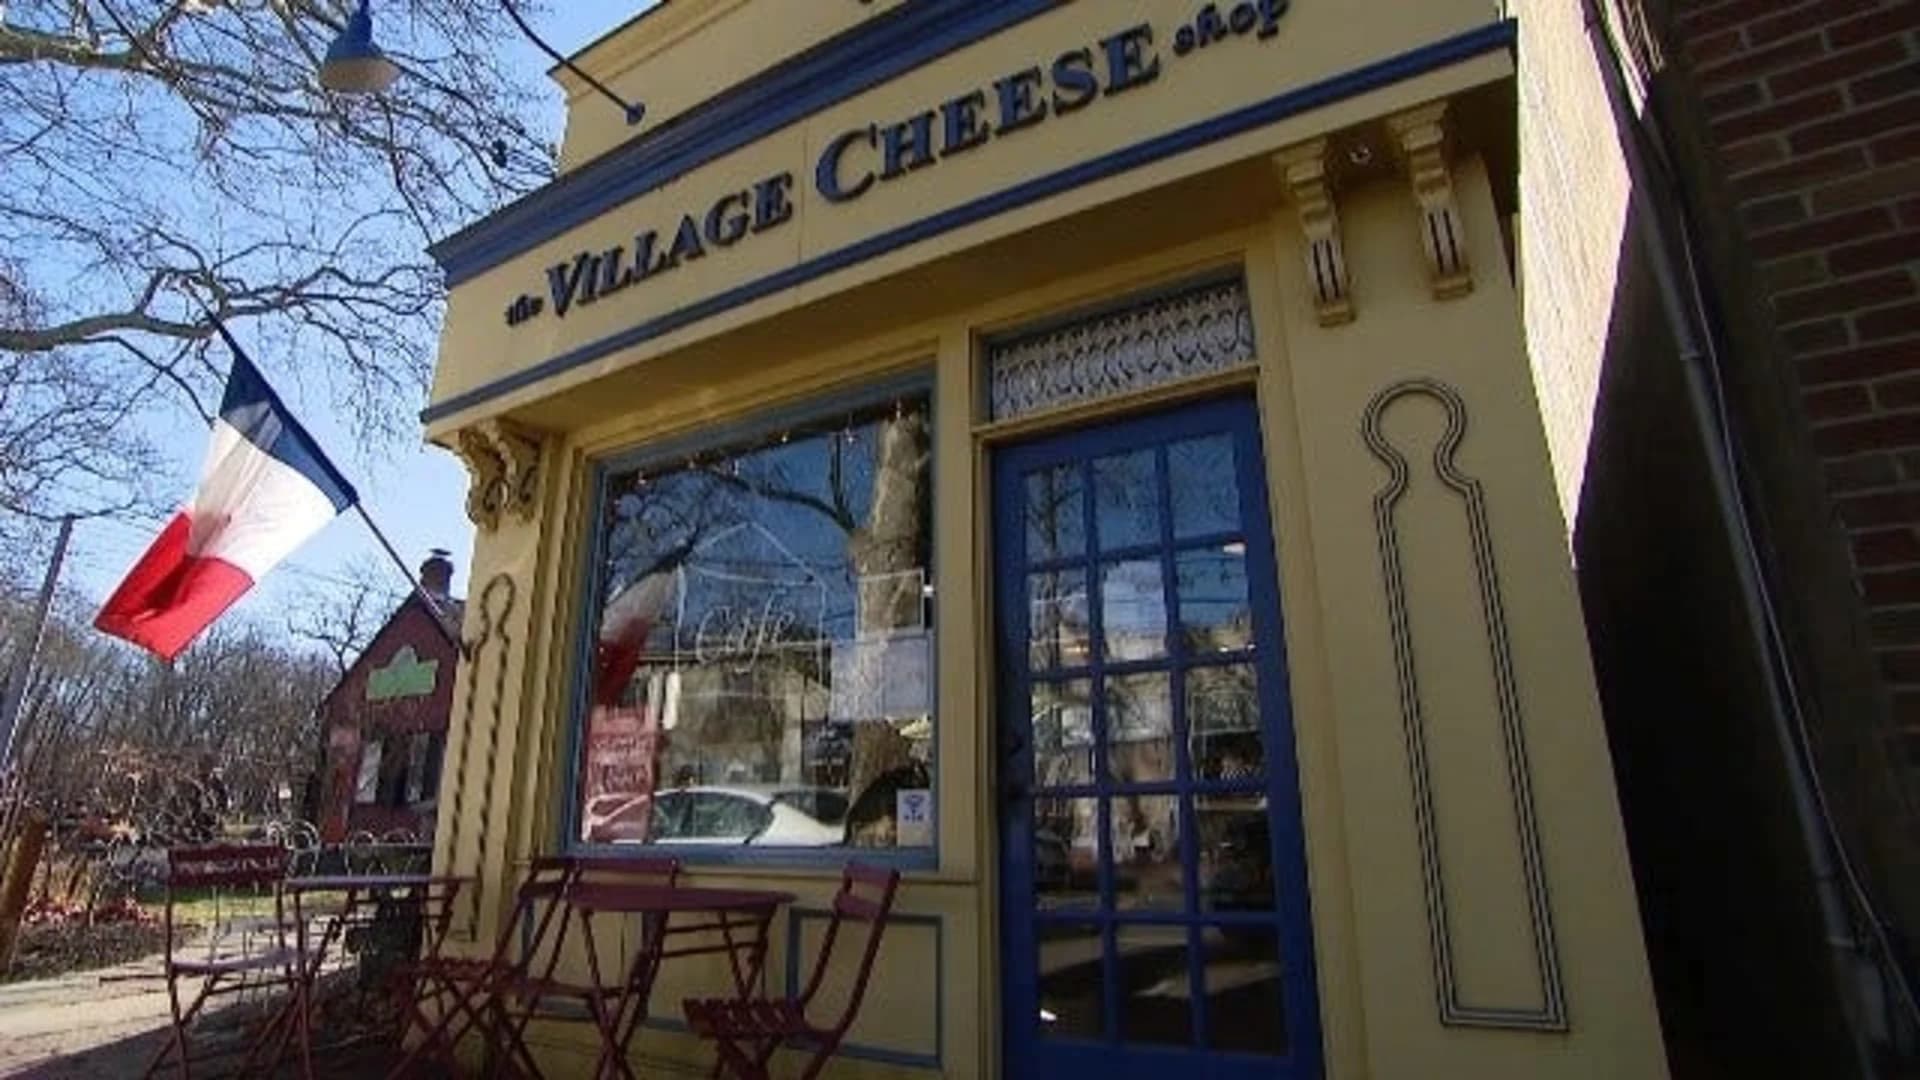 East End: Village Cheese Shop in Mattituck